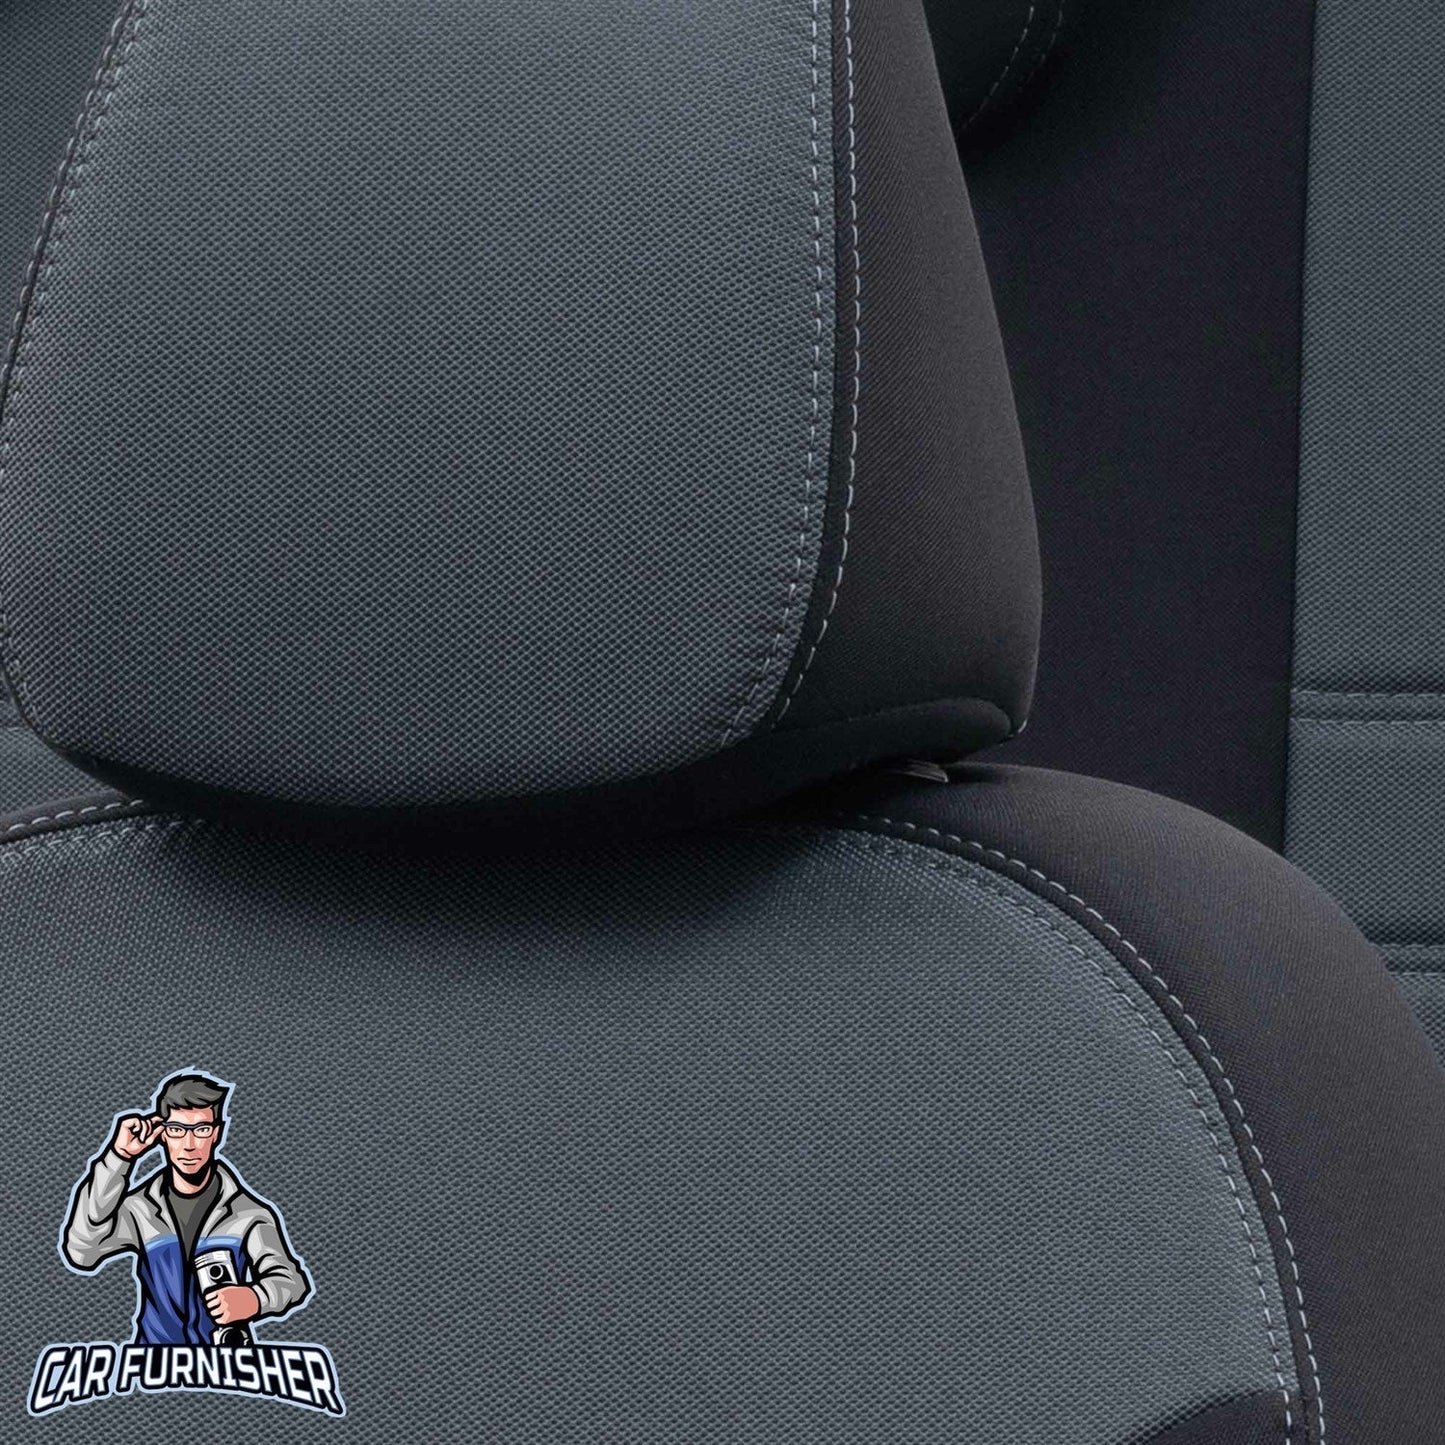 Hyundai Ioniq Seat Covers Original Jacquard Design Smoked Black Jacquard Fabric